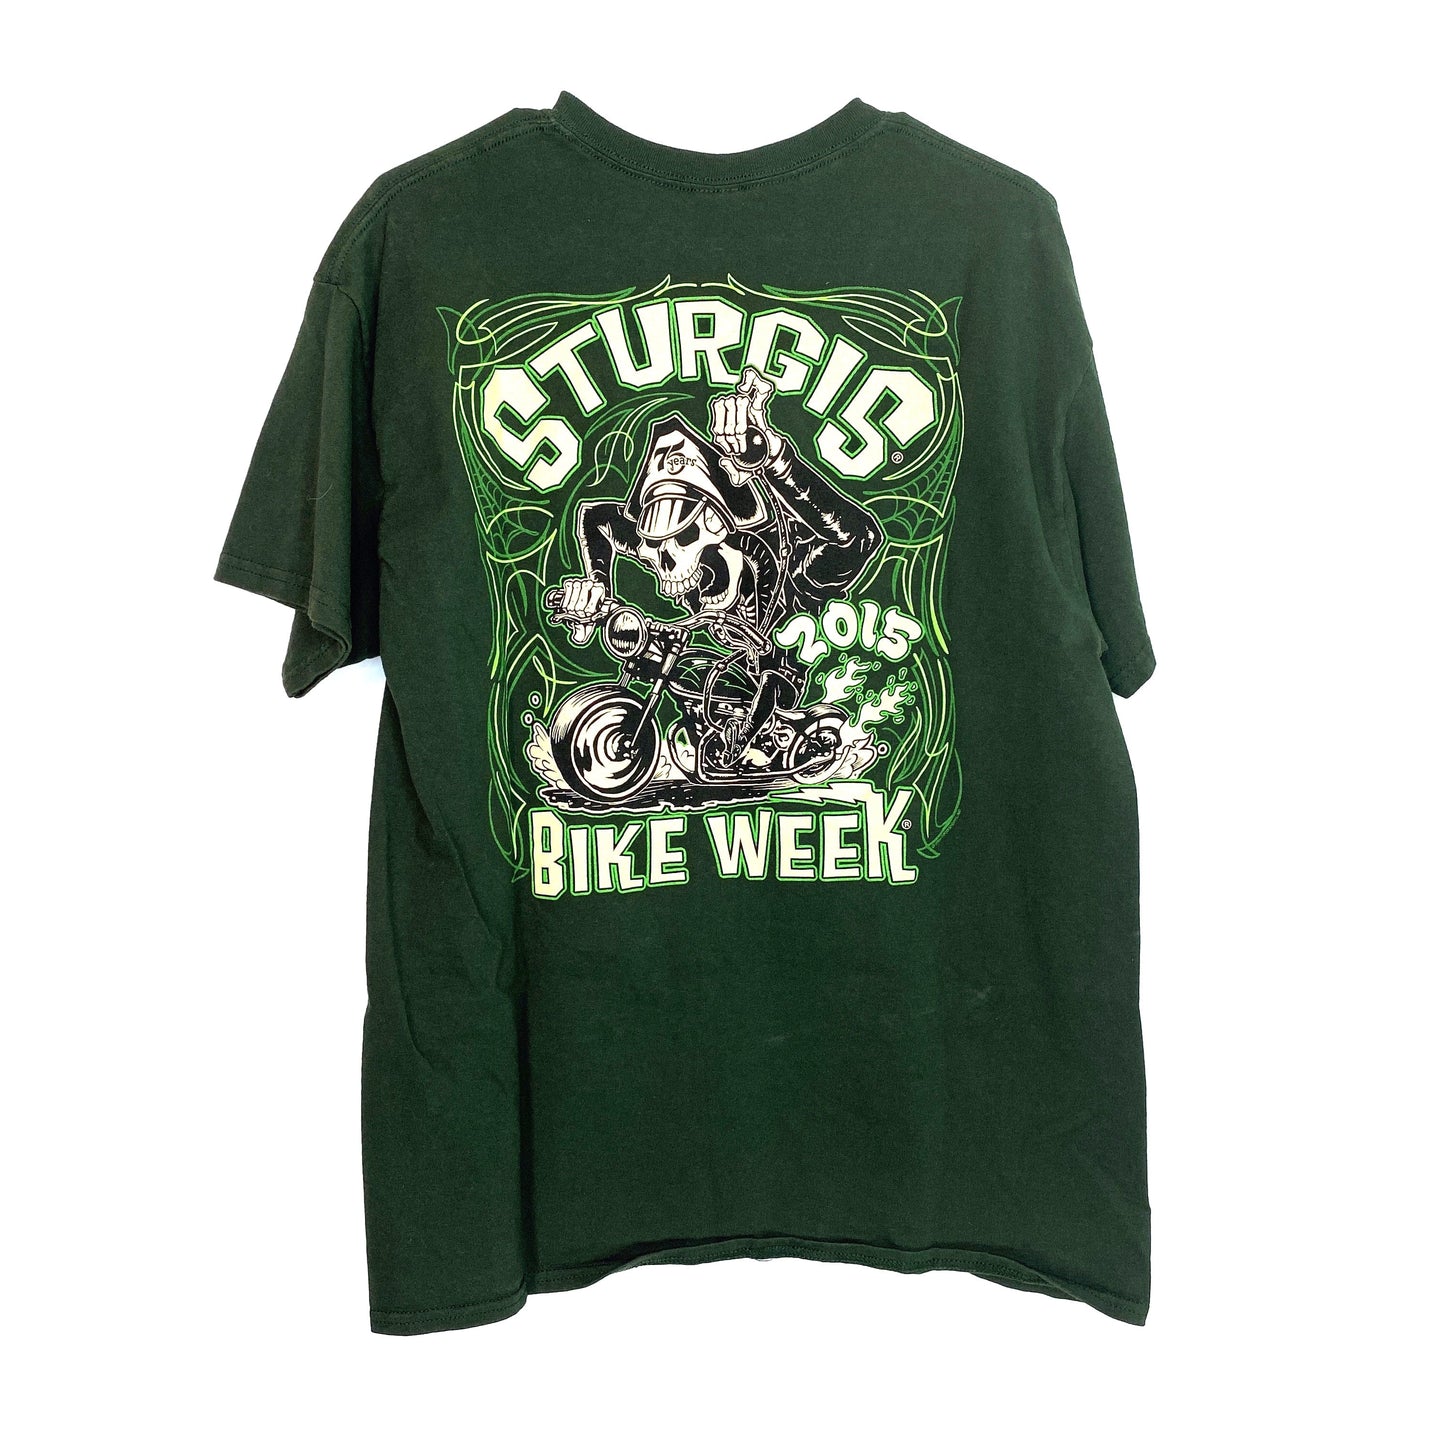 Sturgis Bike Week 2015 Mens Size L Green Graphic T-Shirt S/s 75 years